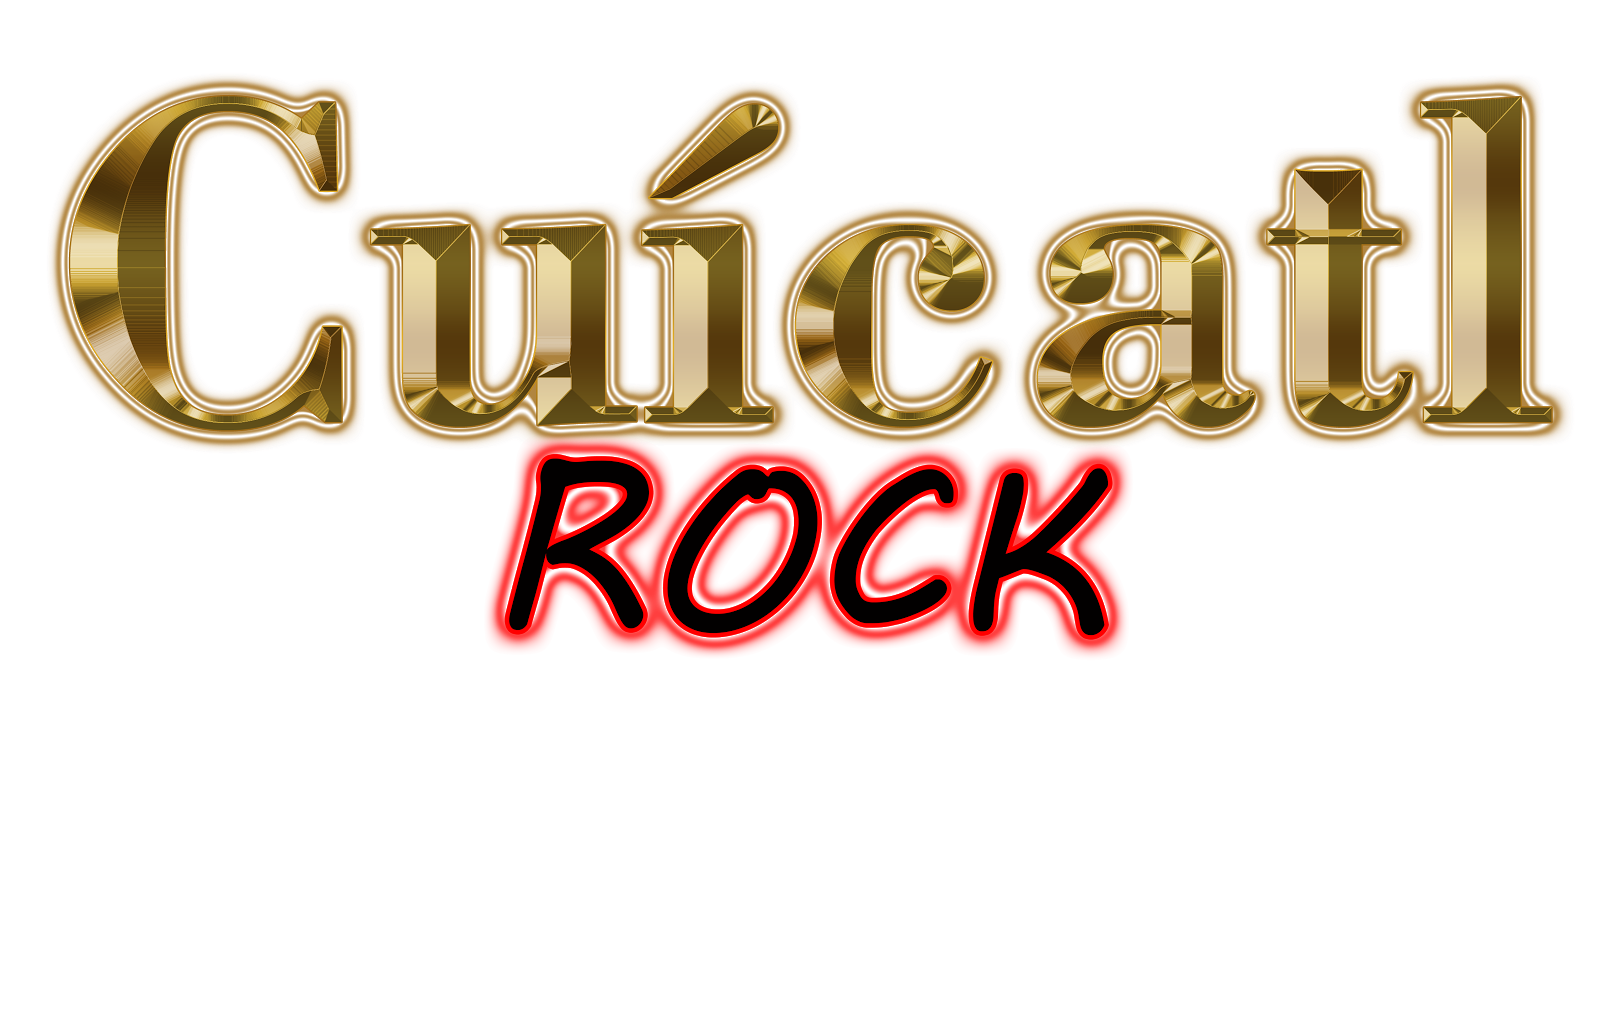 Cuícatl Rock